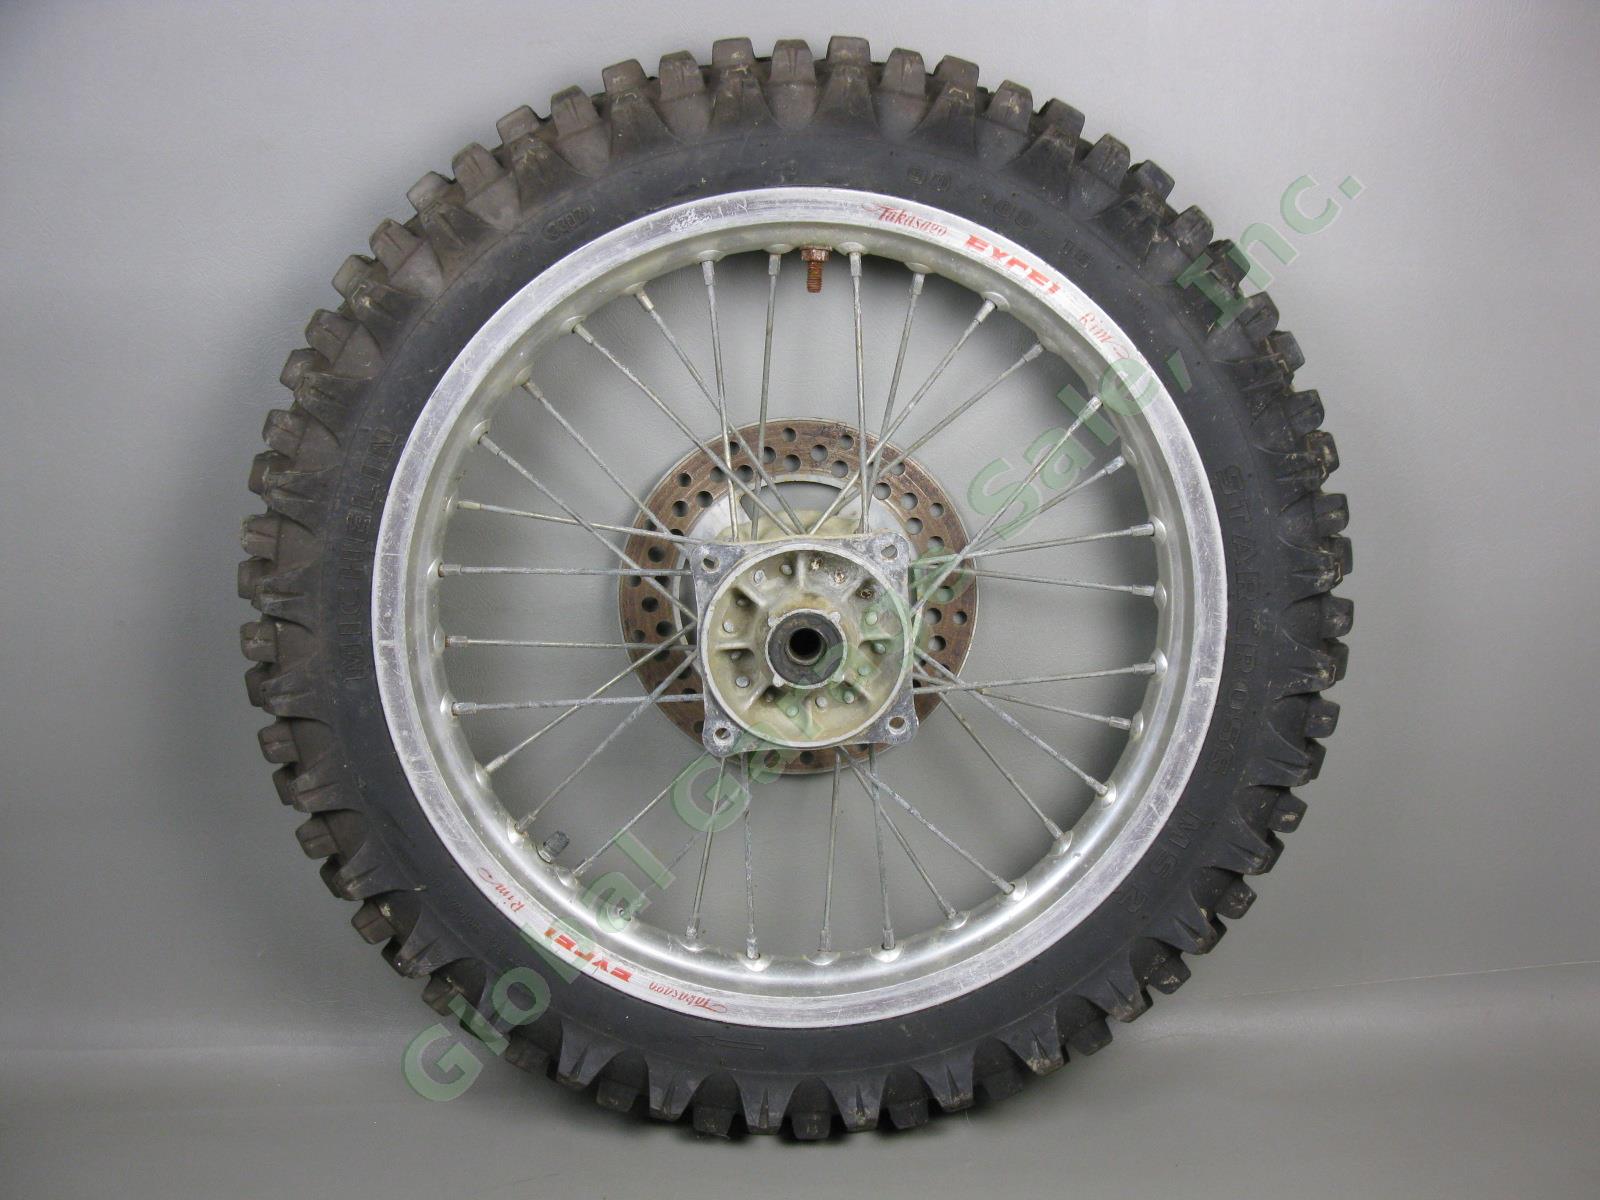 Talon Excel Takasago YZ85 16x1.85 Rear Wheel Rim Michelin Starcross 90/100 Tire 2